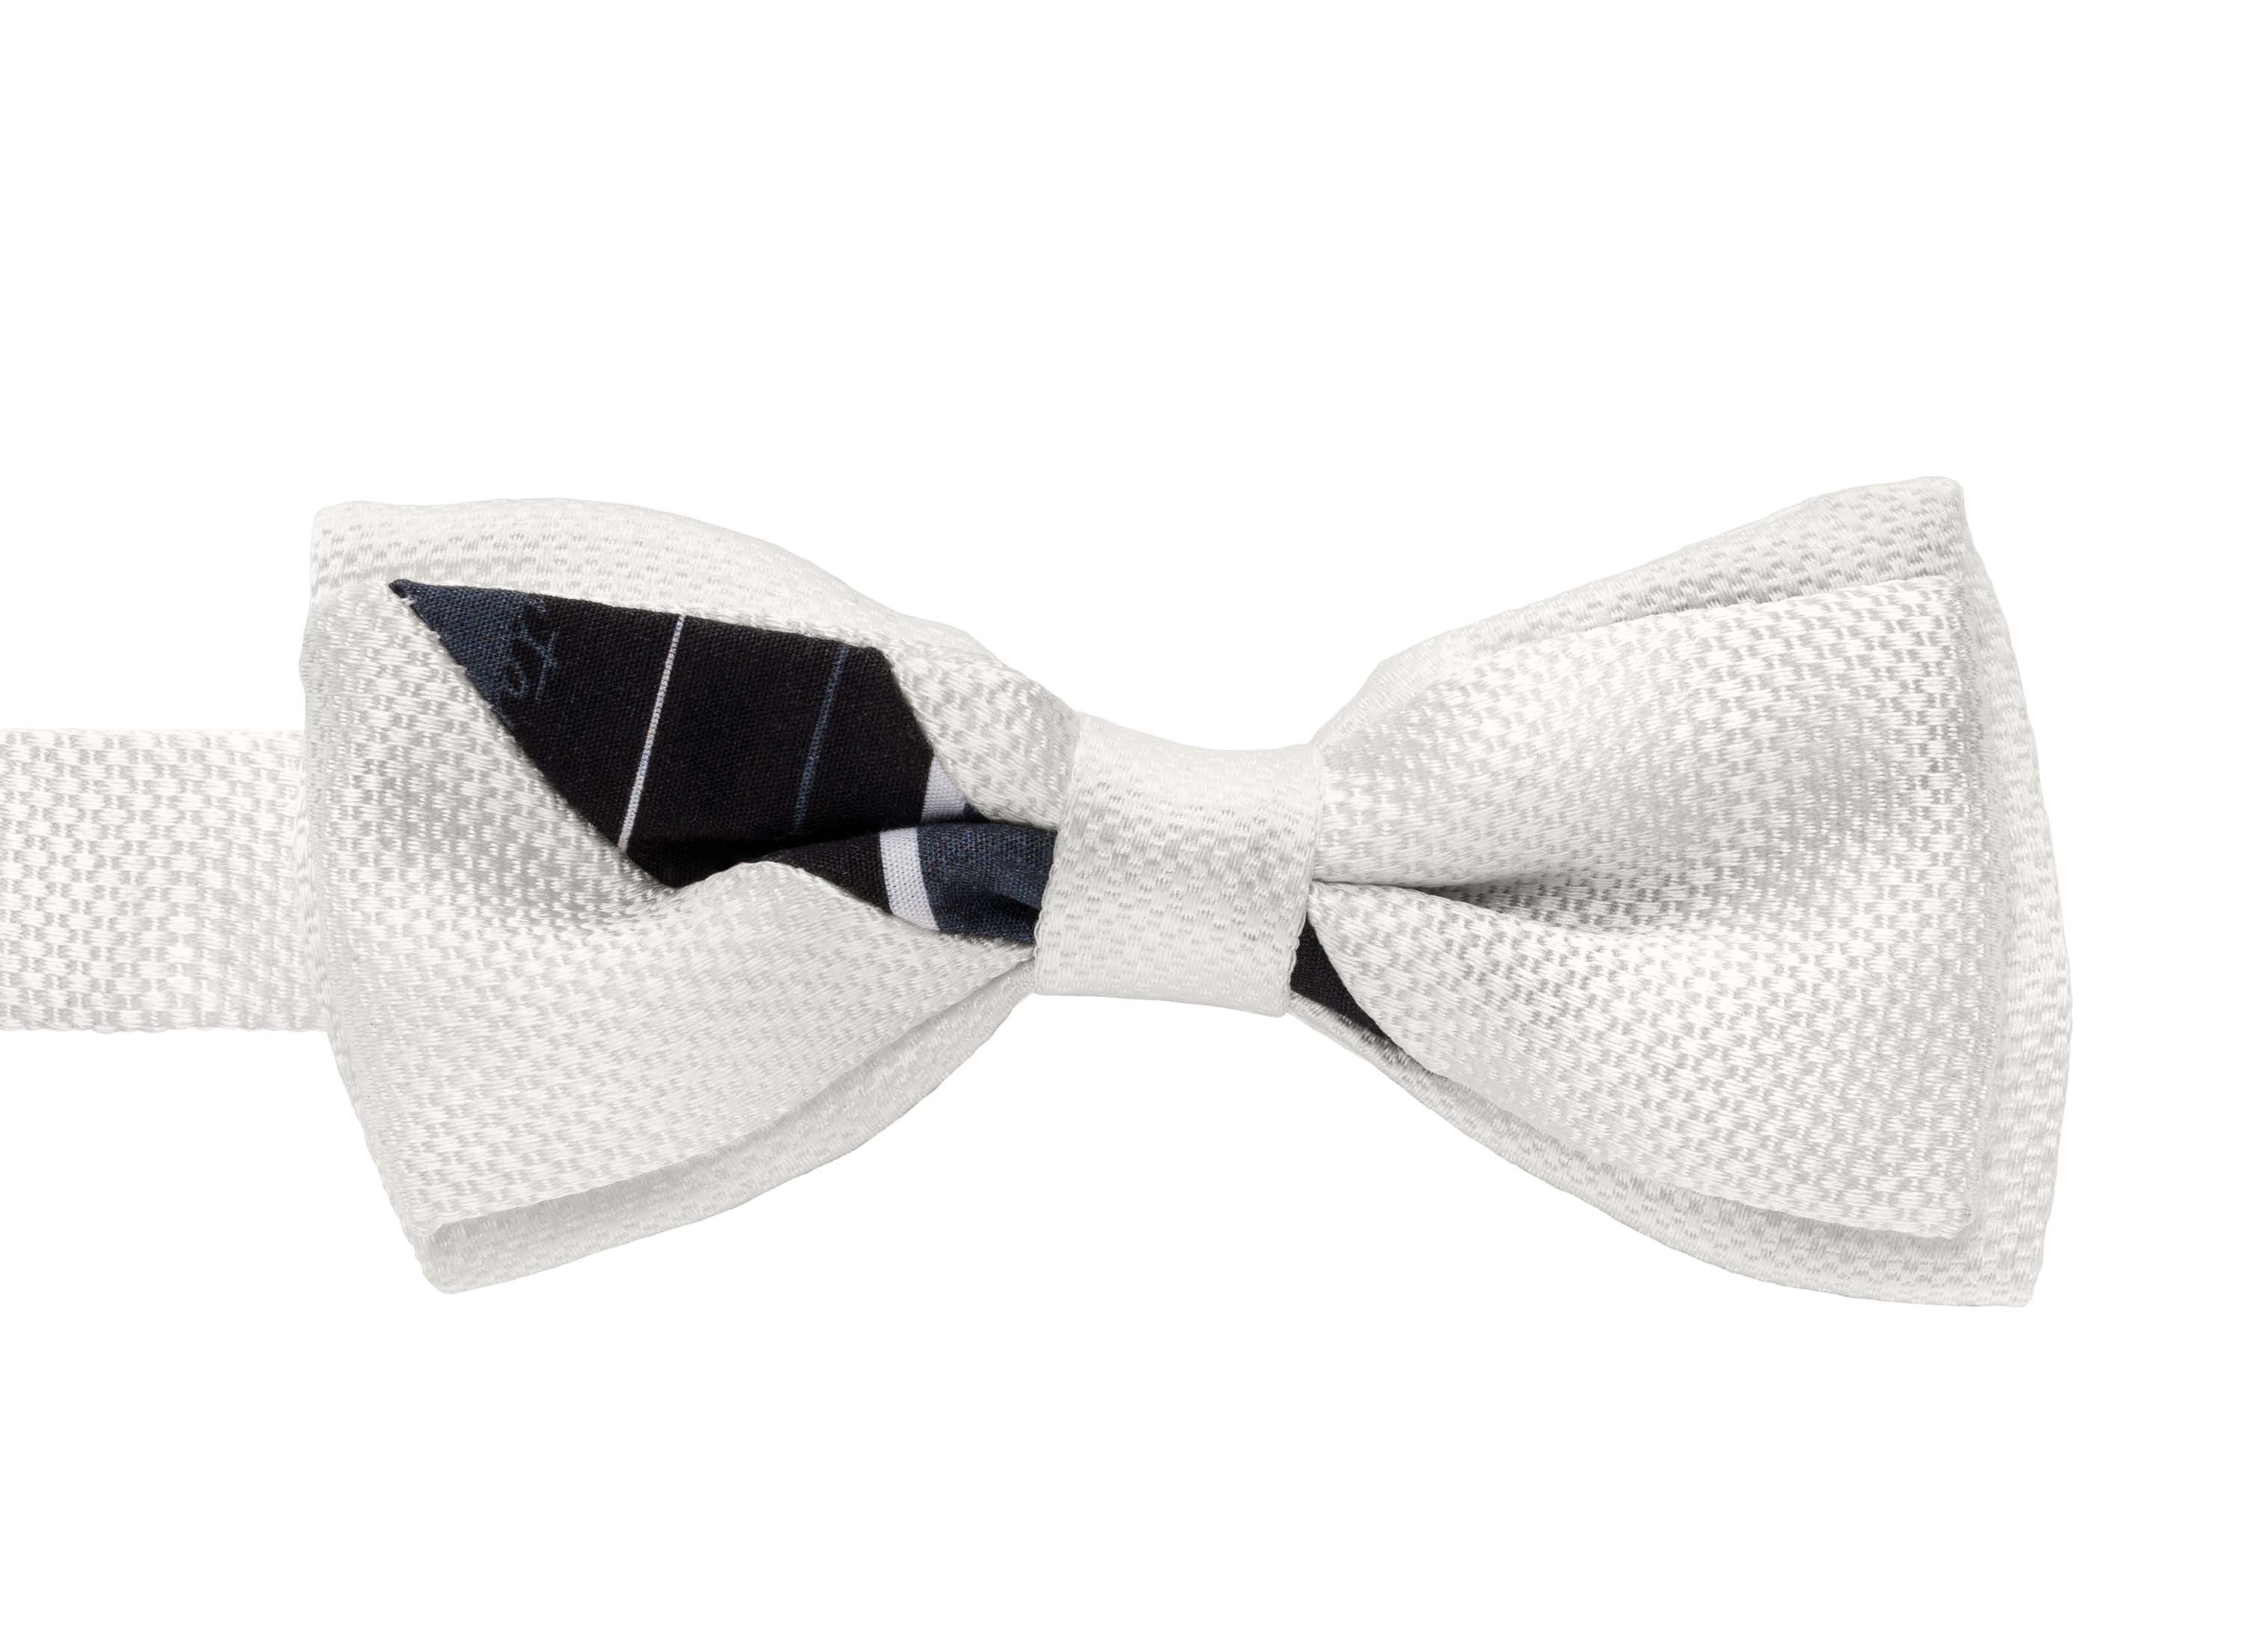 Dahlia Bow Tie (100% Silk, White and Black)